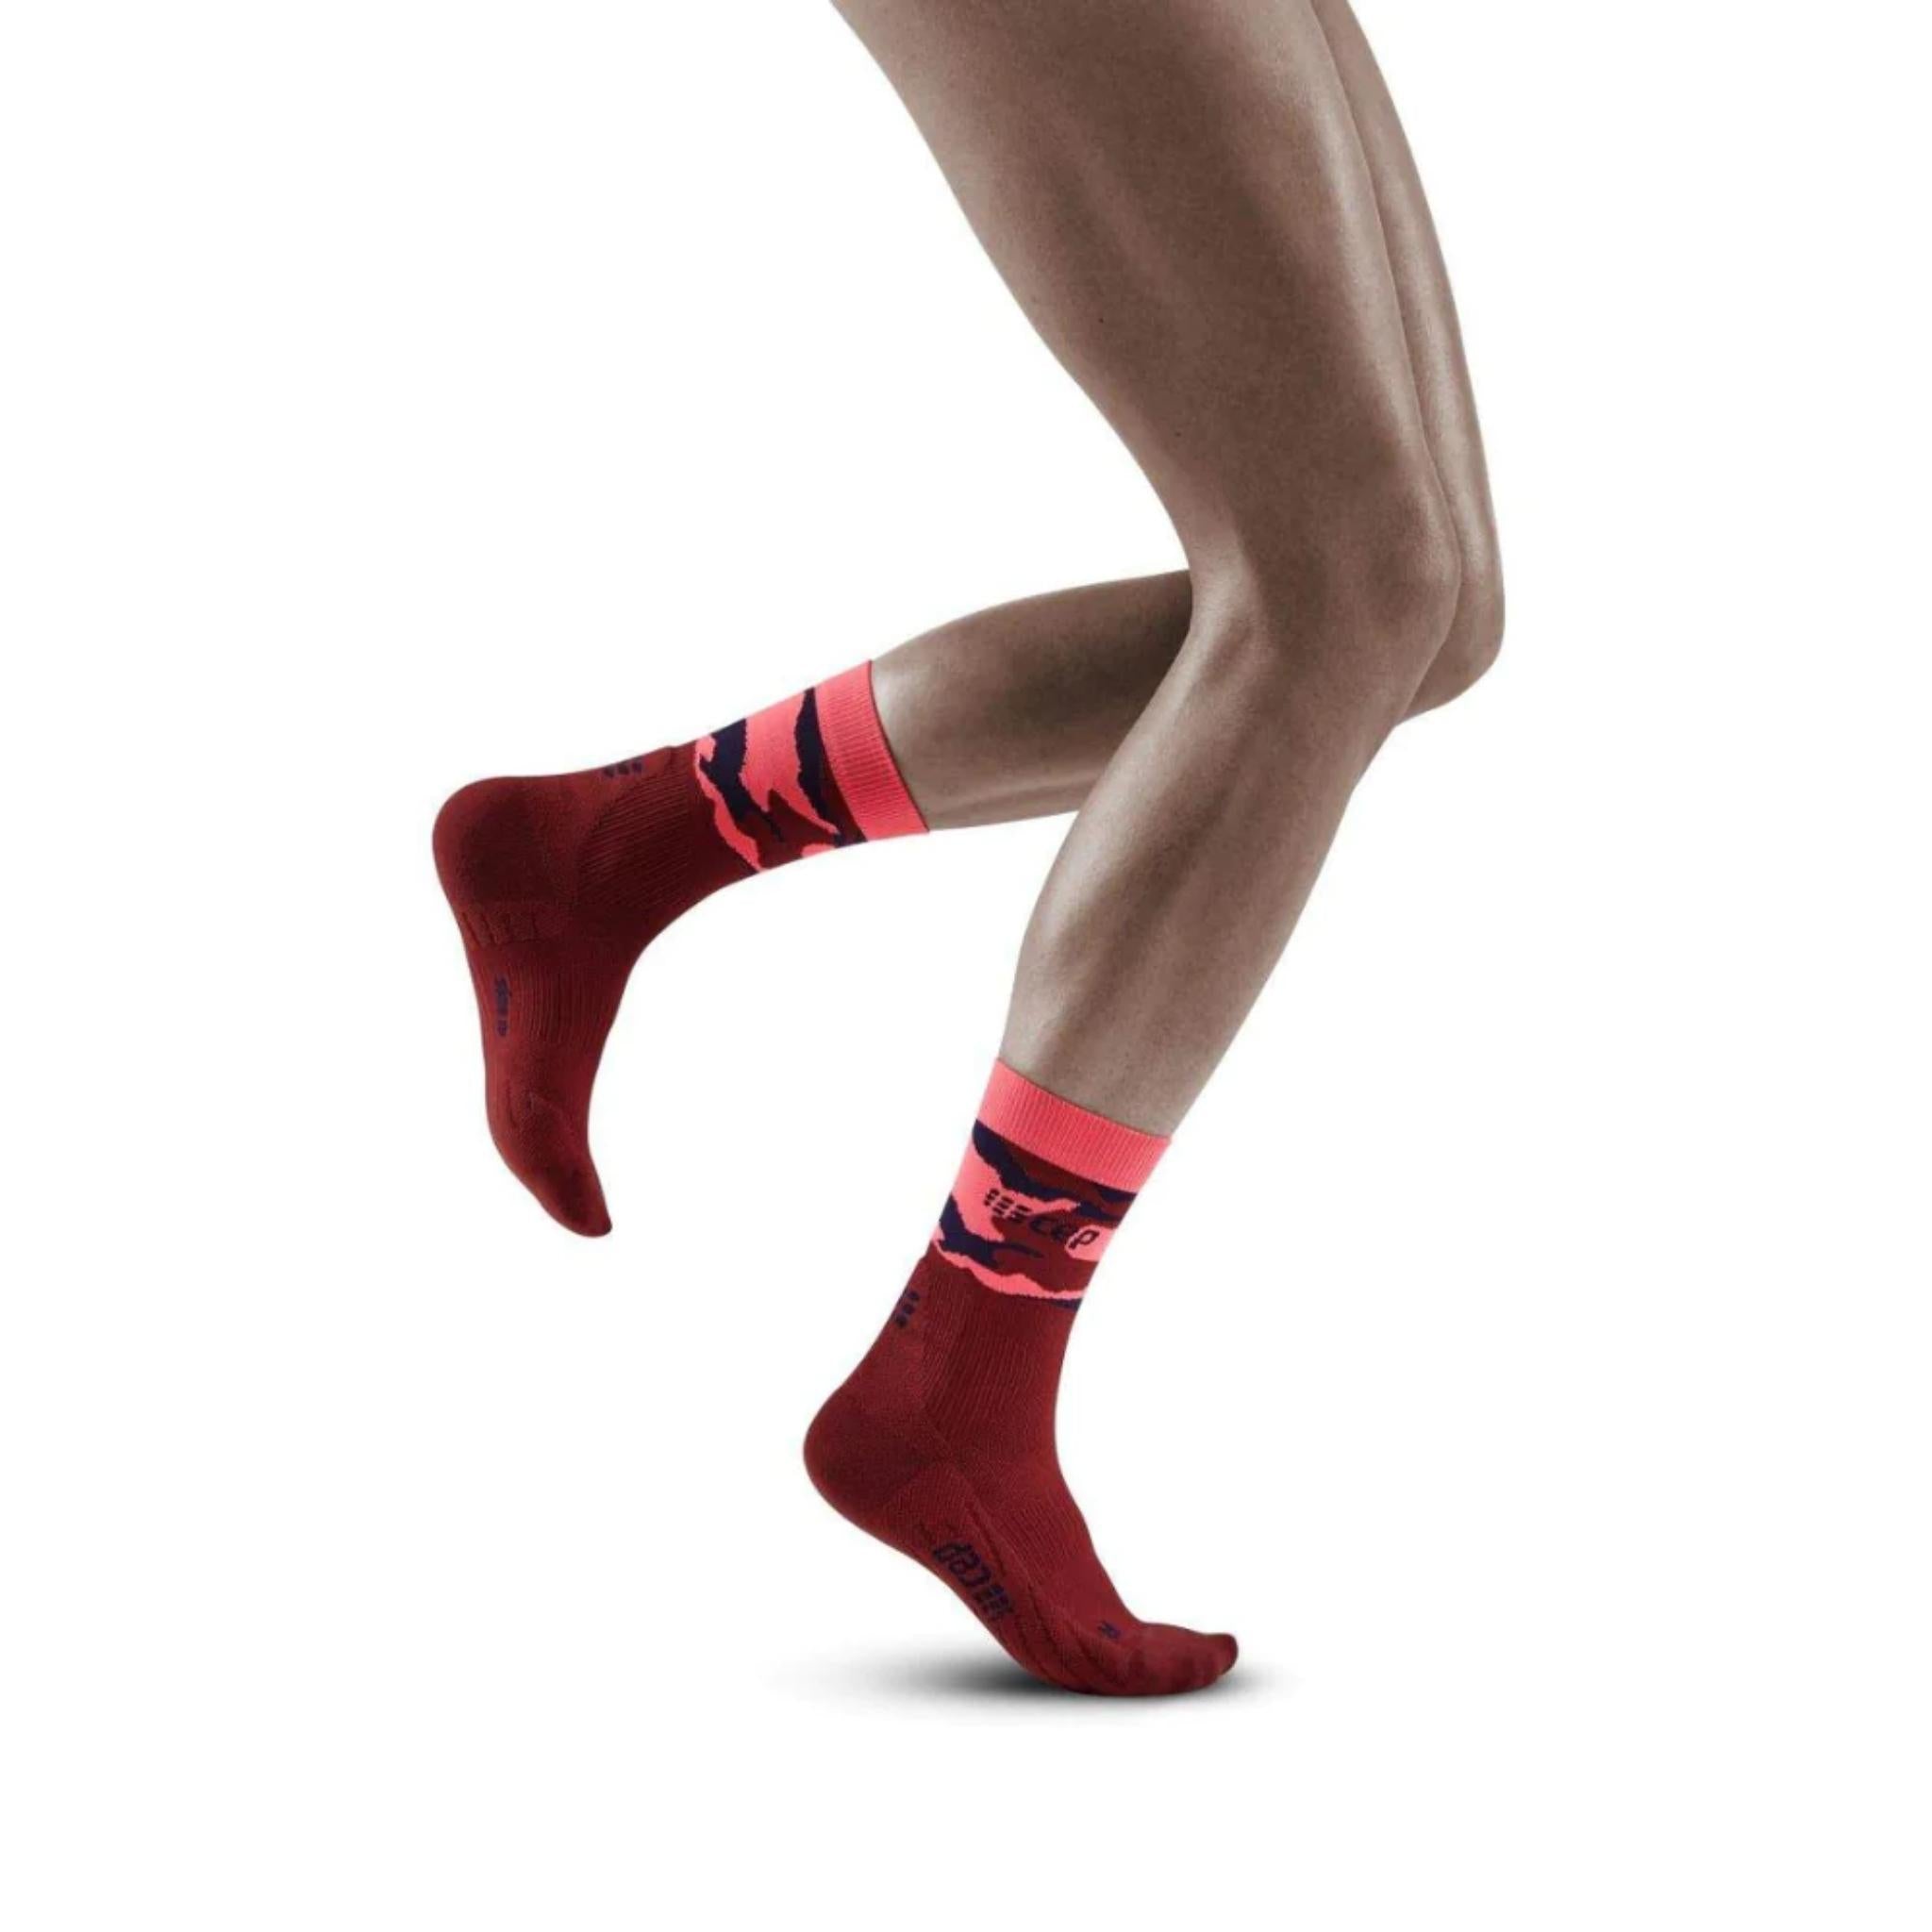 Camocloud Mid Cut Socks | Men